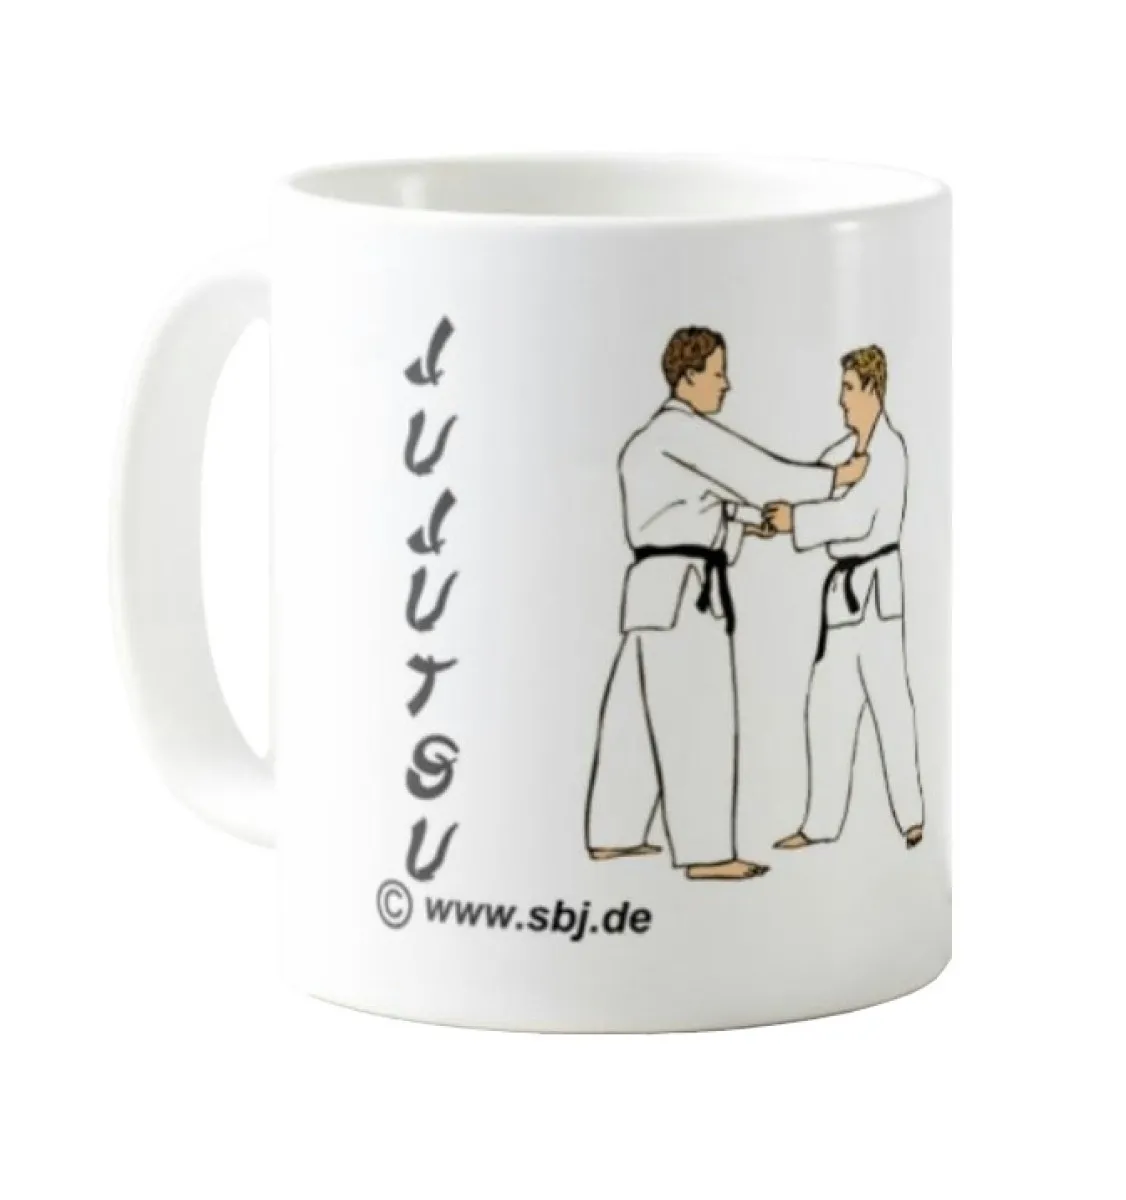 Ju-Jutsu cup